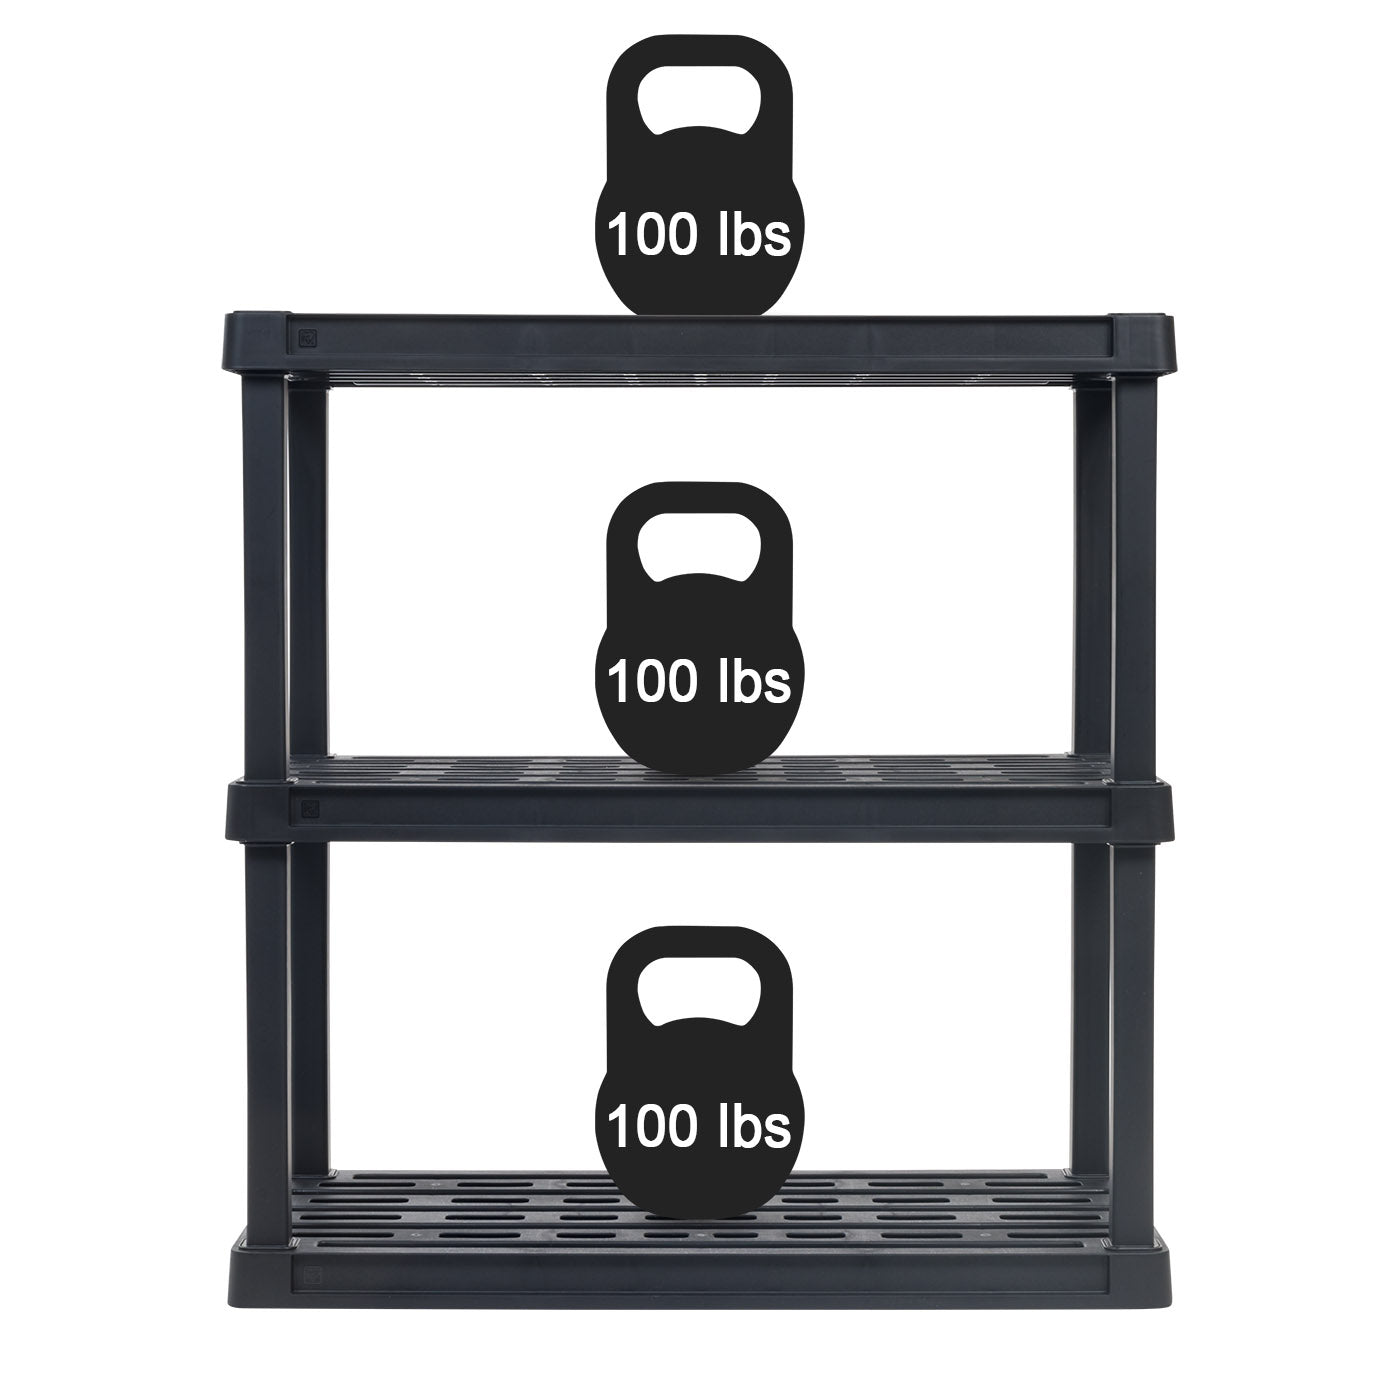 Iris USA, Plastic Rack Shelf with 5 Large Shelves, Black